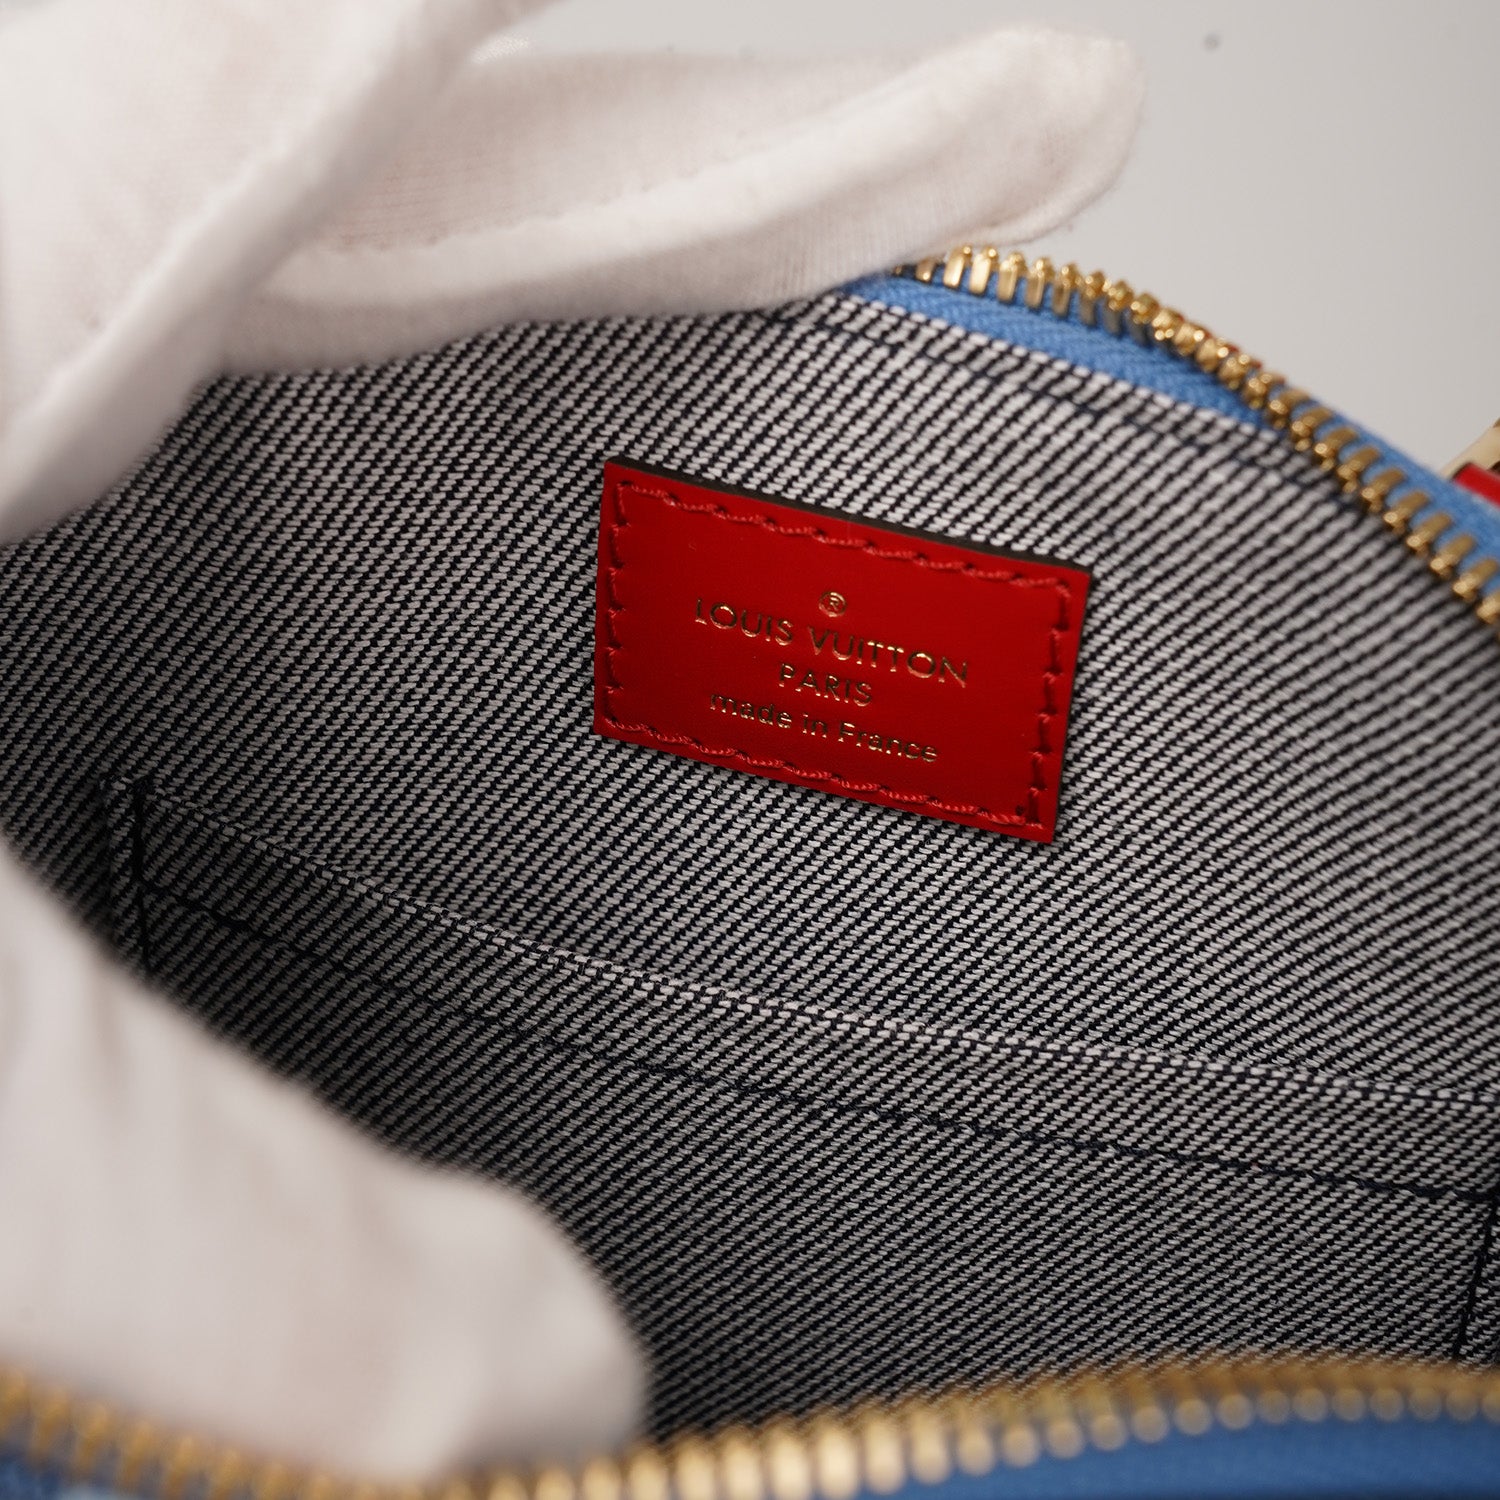 Louis Vuitton Damier Monogram Denim Patch Work Bag Collection